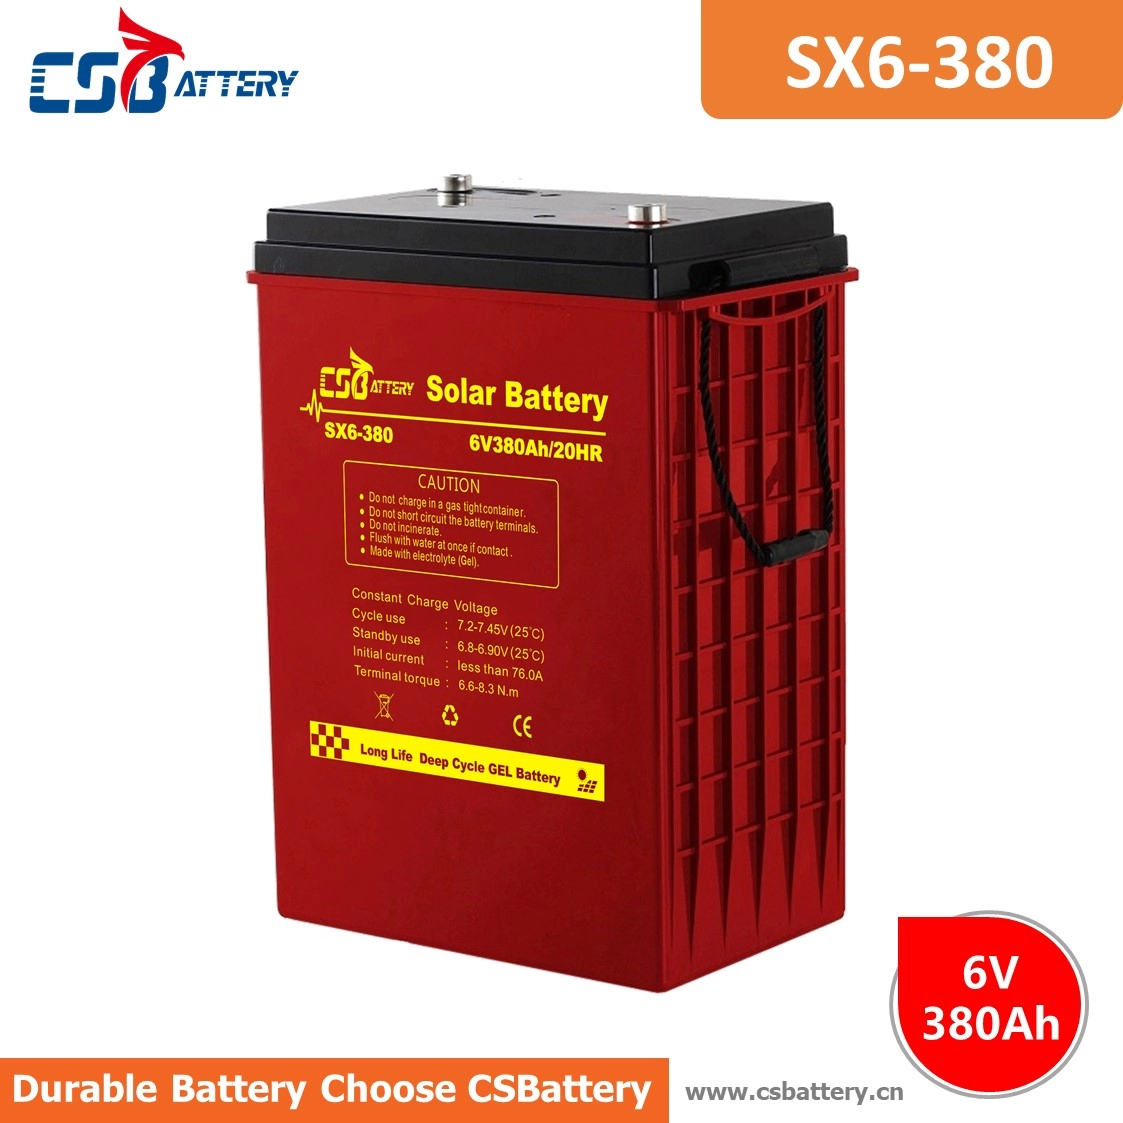 SX6-380 6V 380Ah Deep Cycle GEL Battery